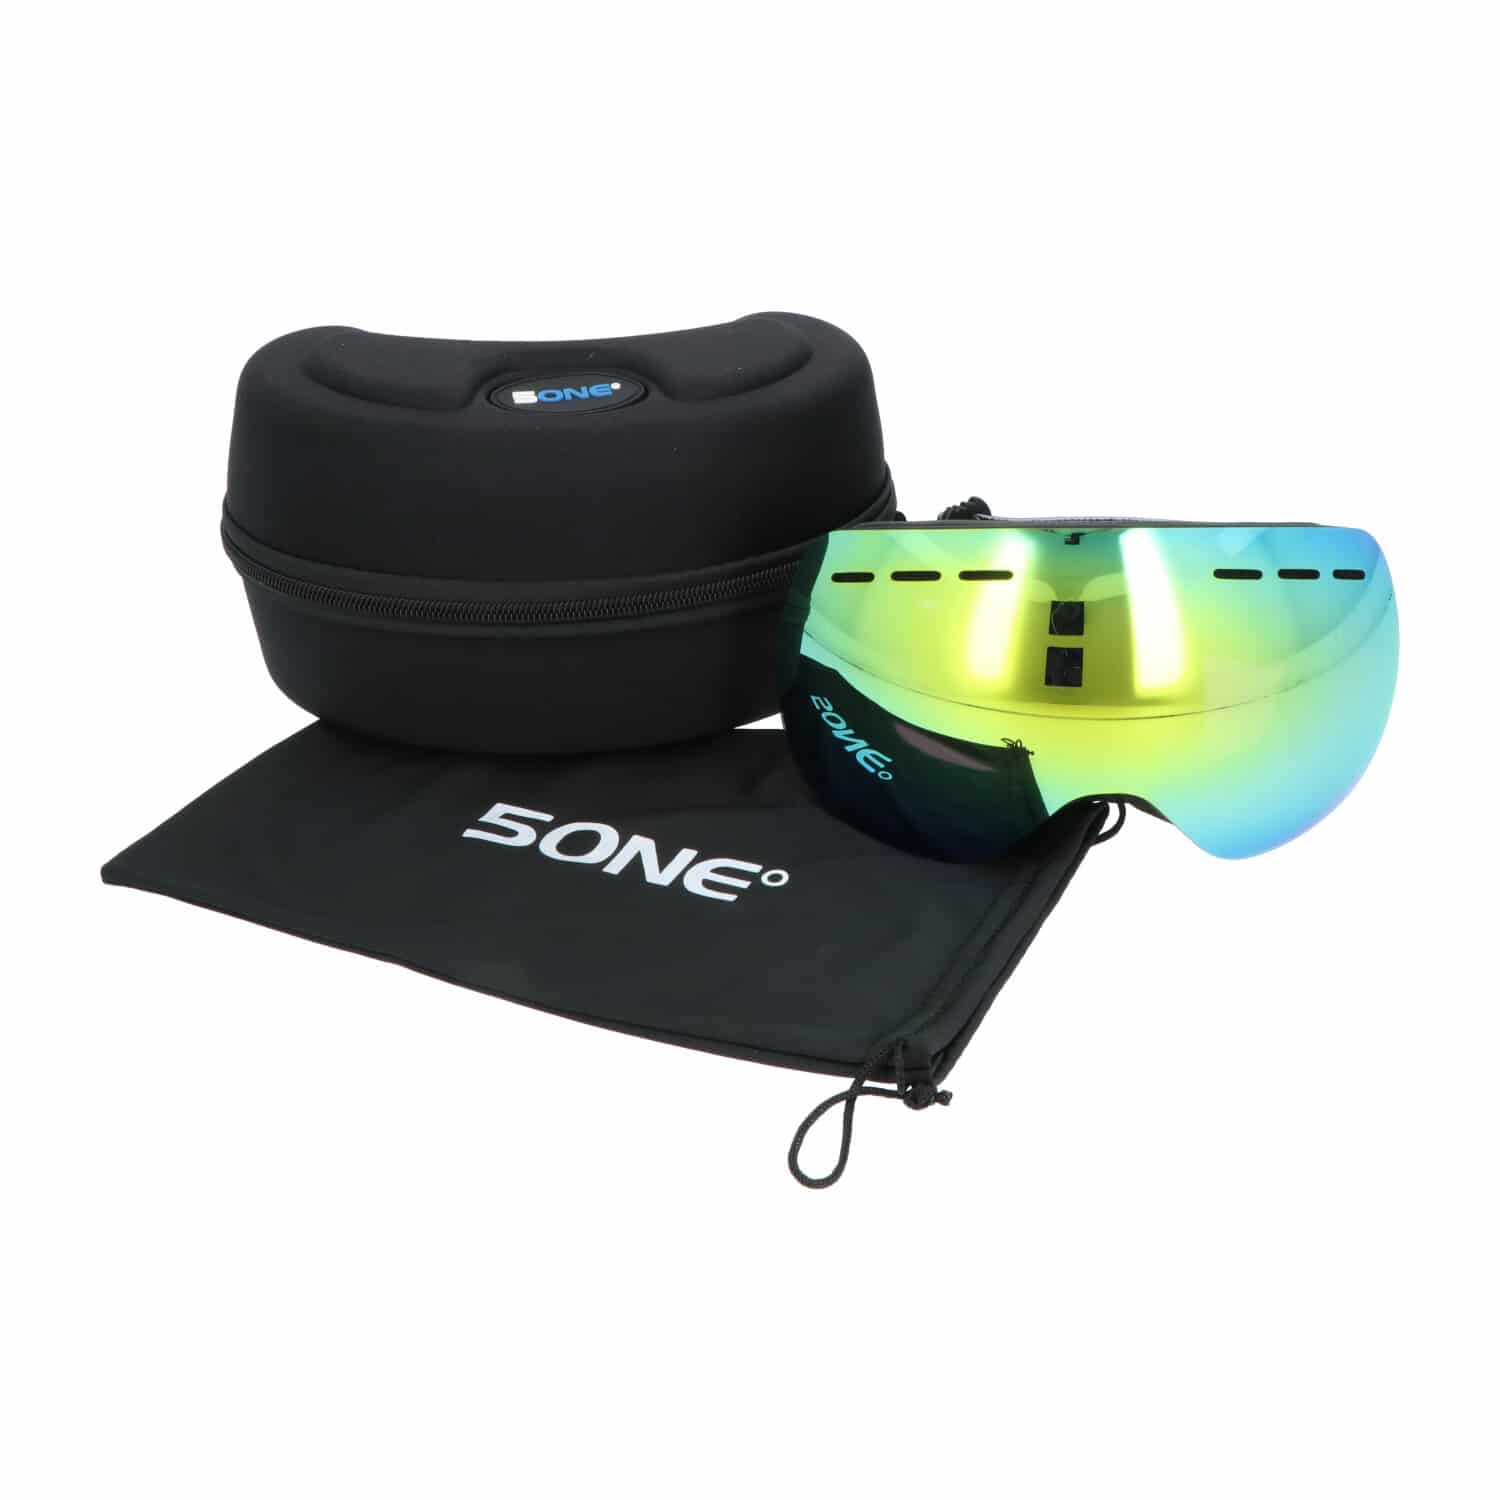 5one® Alpine 1 Gold anti-condens Skibril met hardcase - Zwart frame